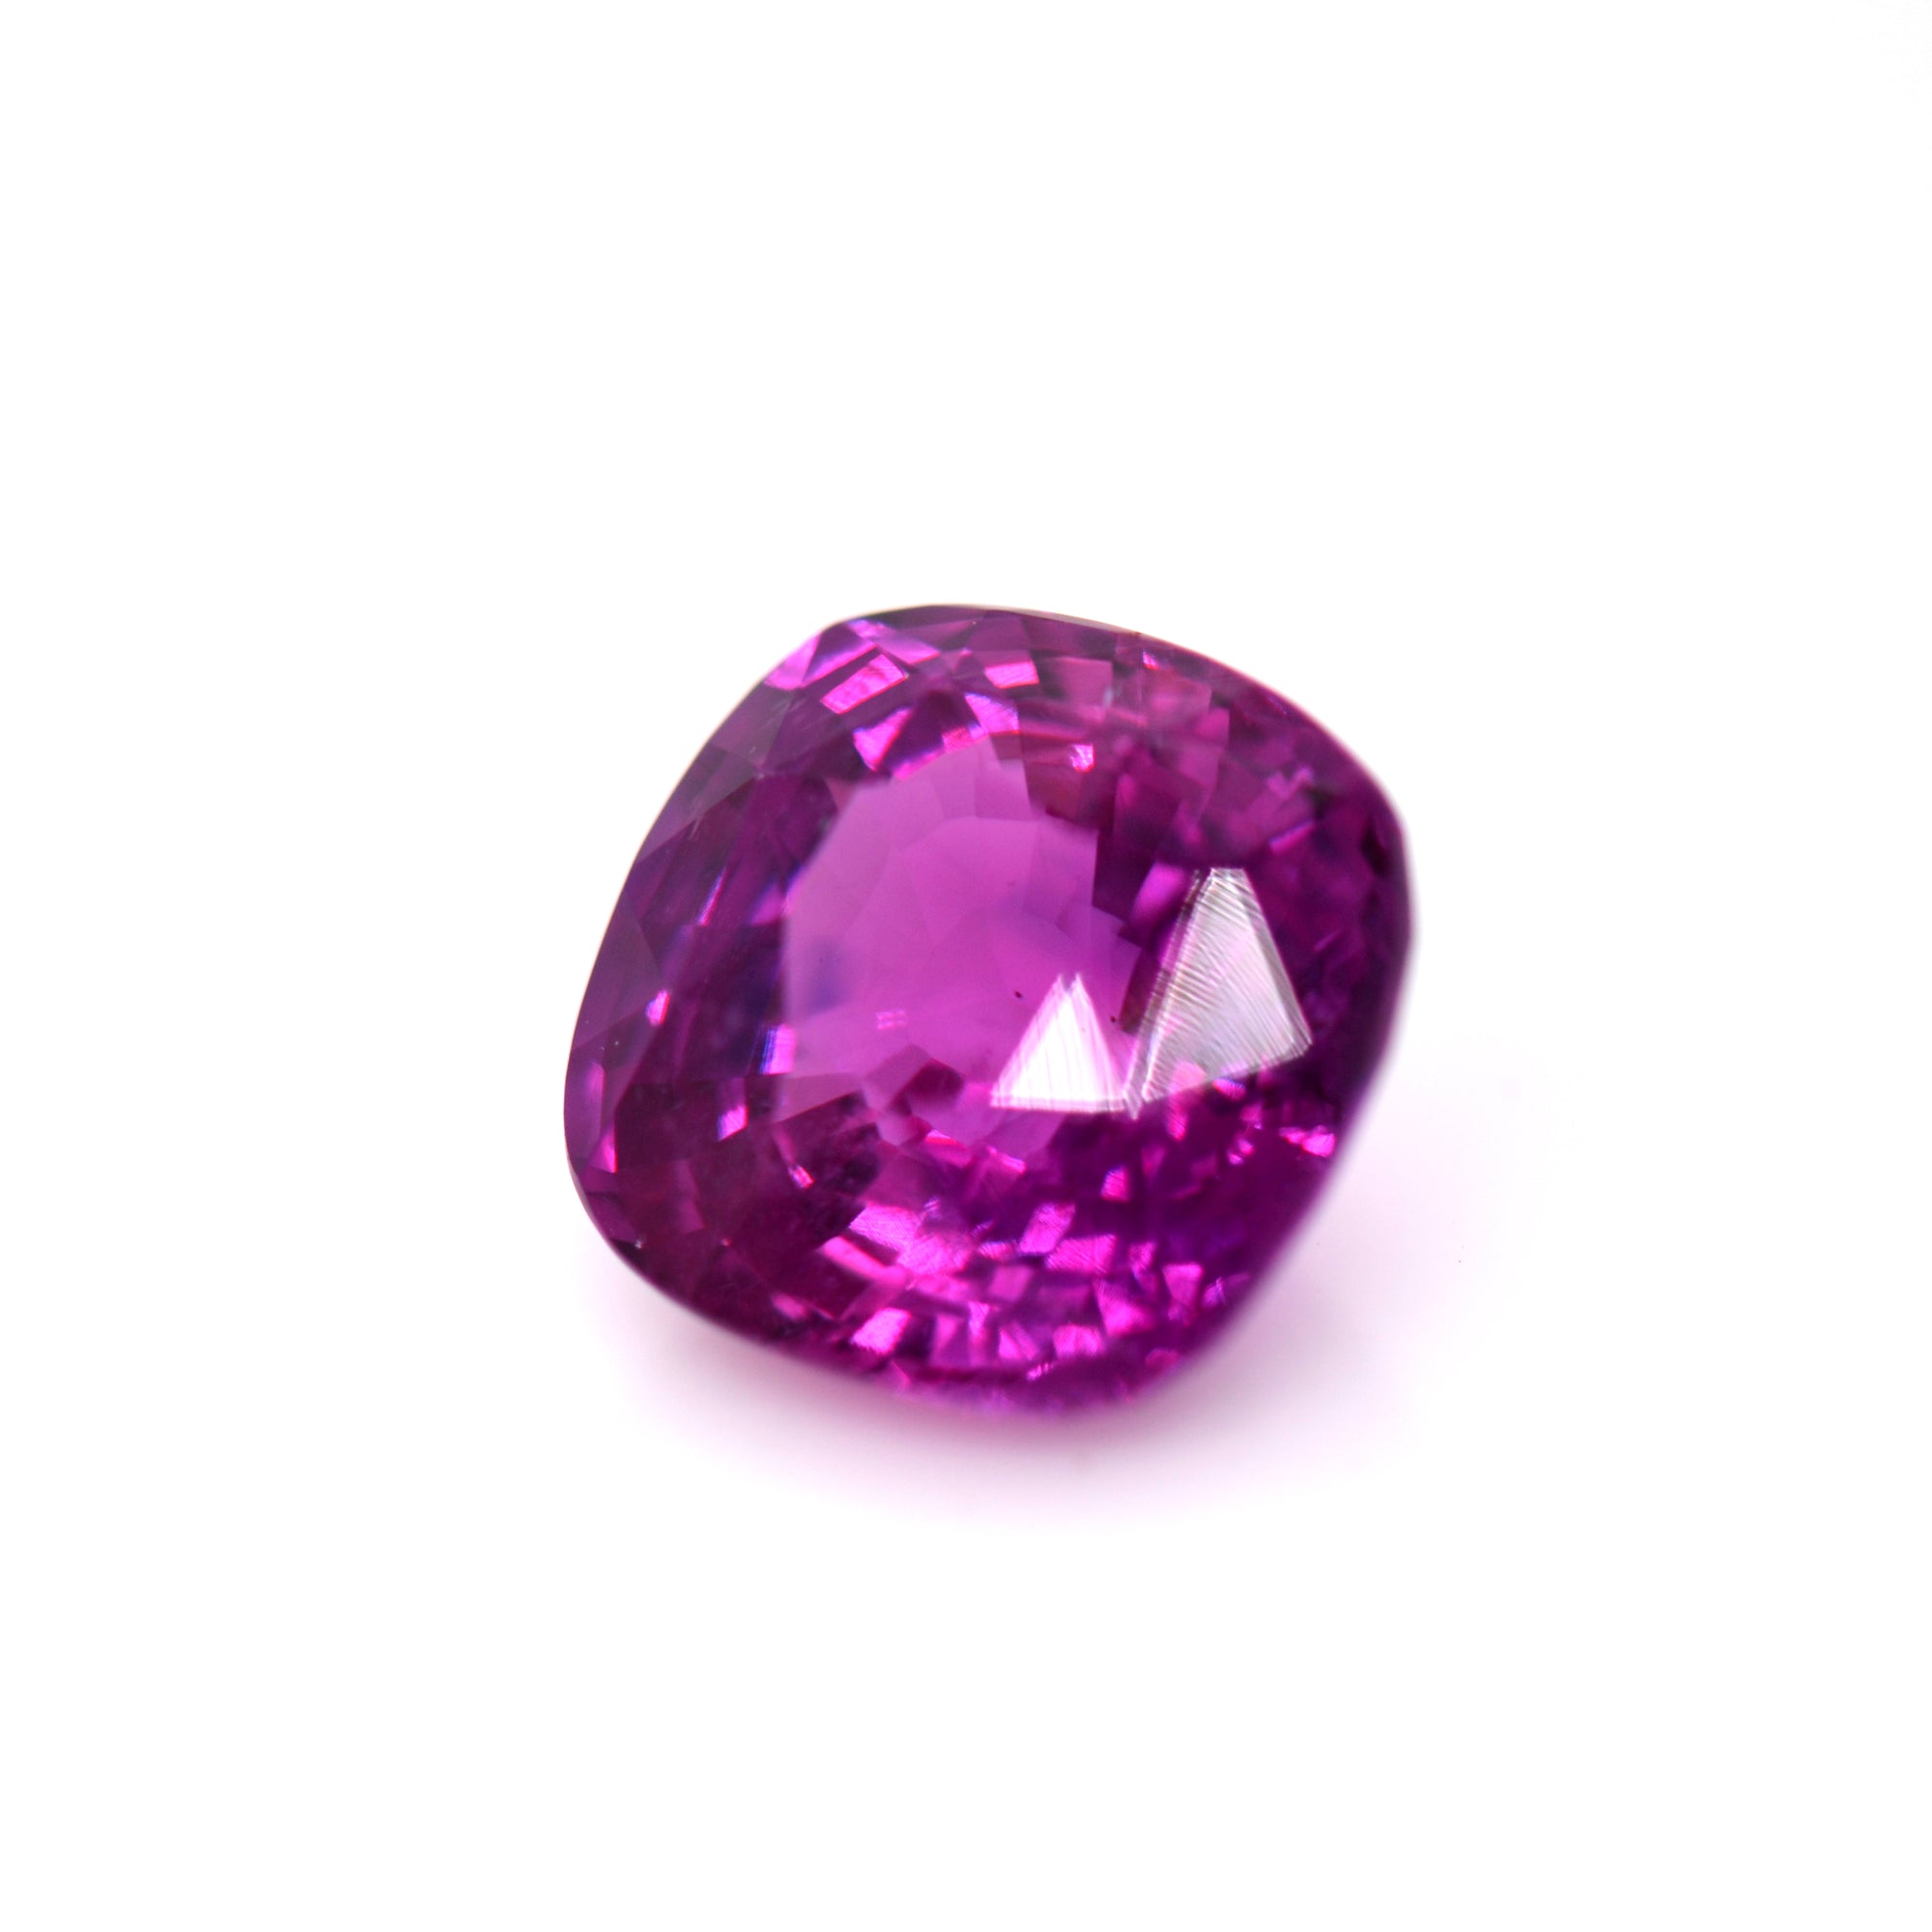 3.02 Carat Reddish-Purple Sapphire